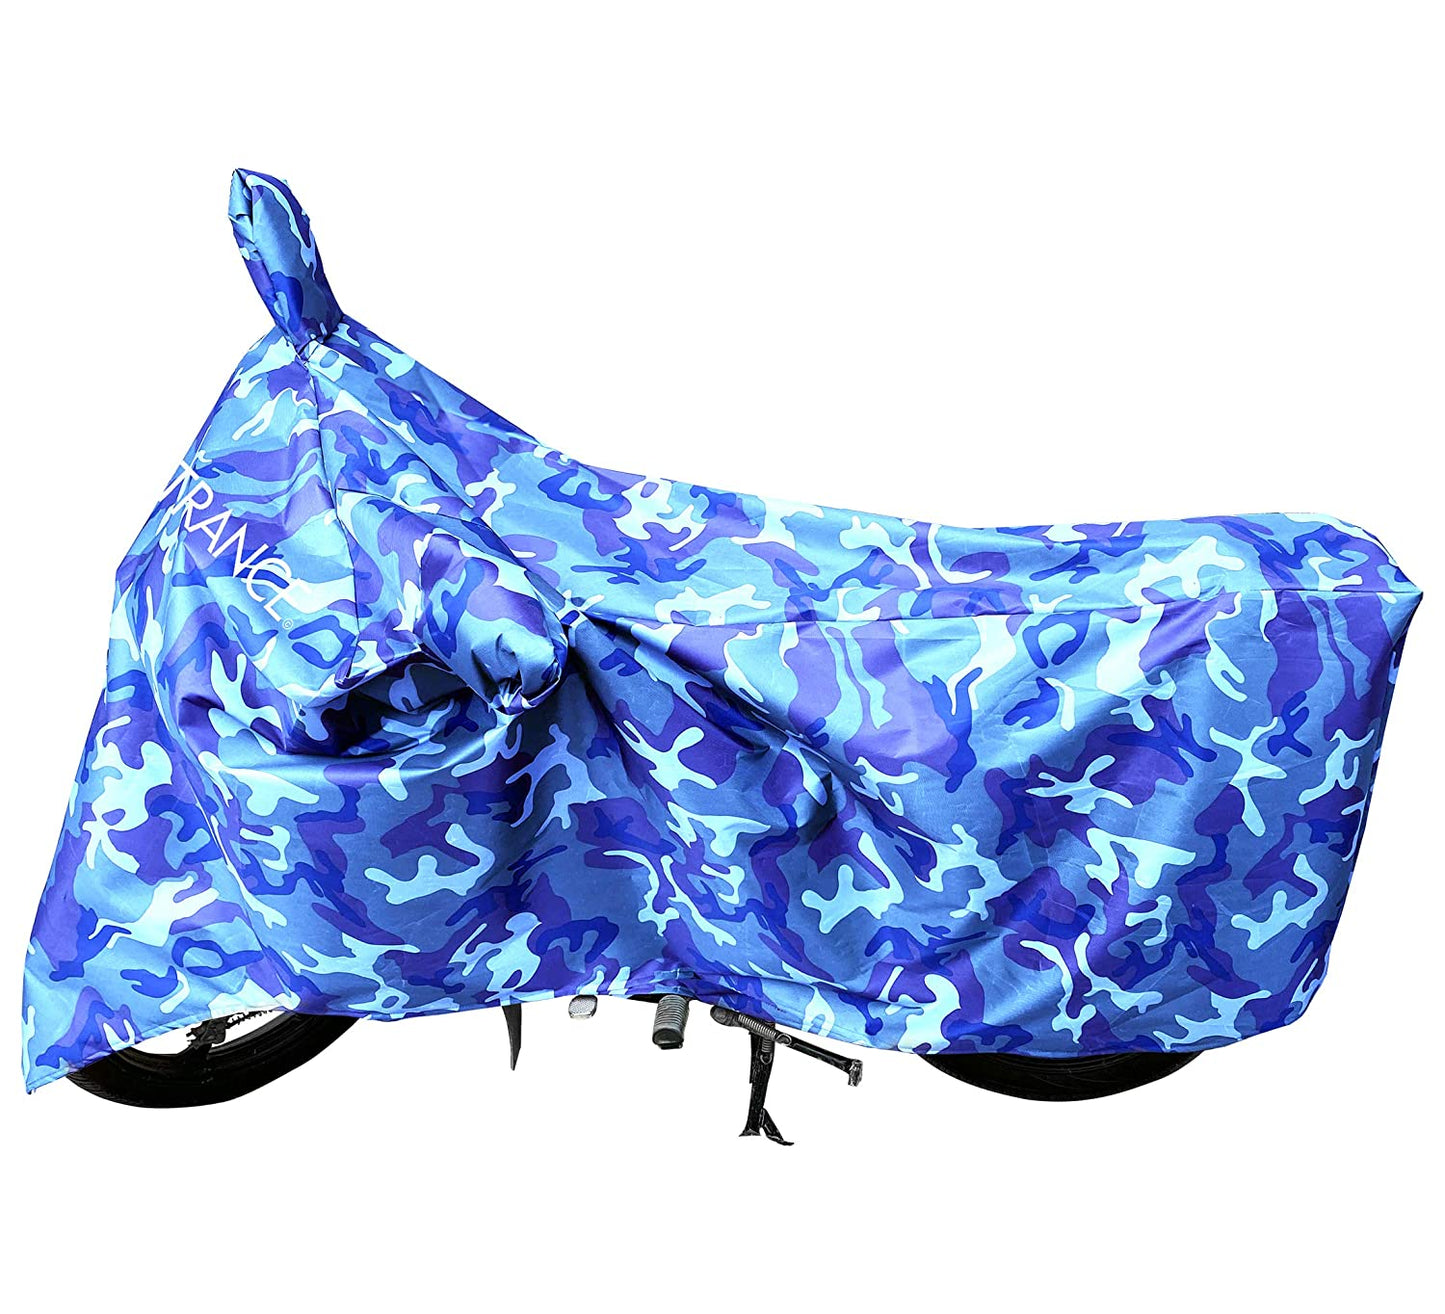 MotoTrance Jungle Bike Body Covers For Kawasaki Ninja ZX 14R - Interlock-Stitched Waterproof and Heat Resistant with Mirror Pockets